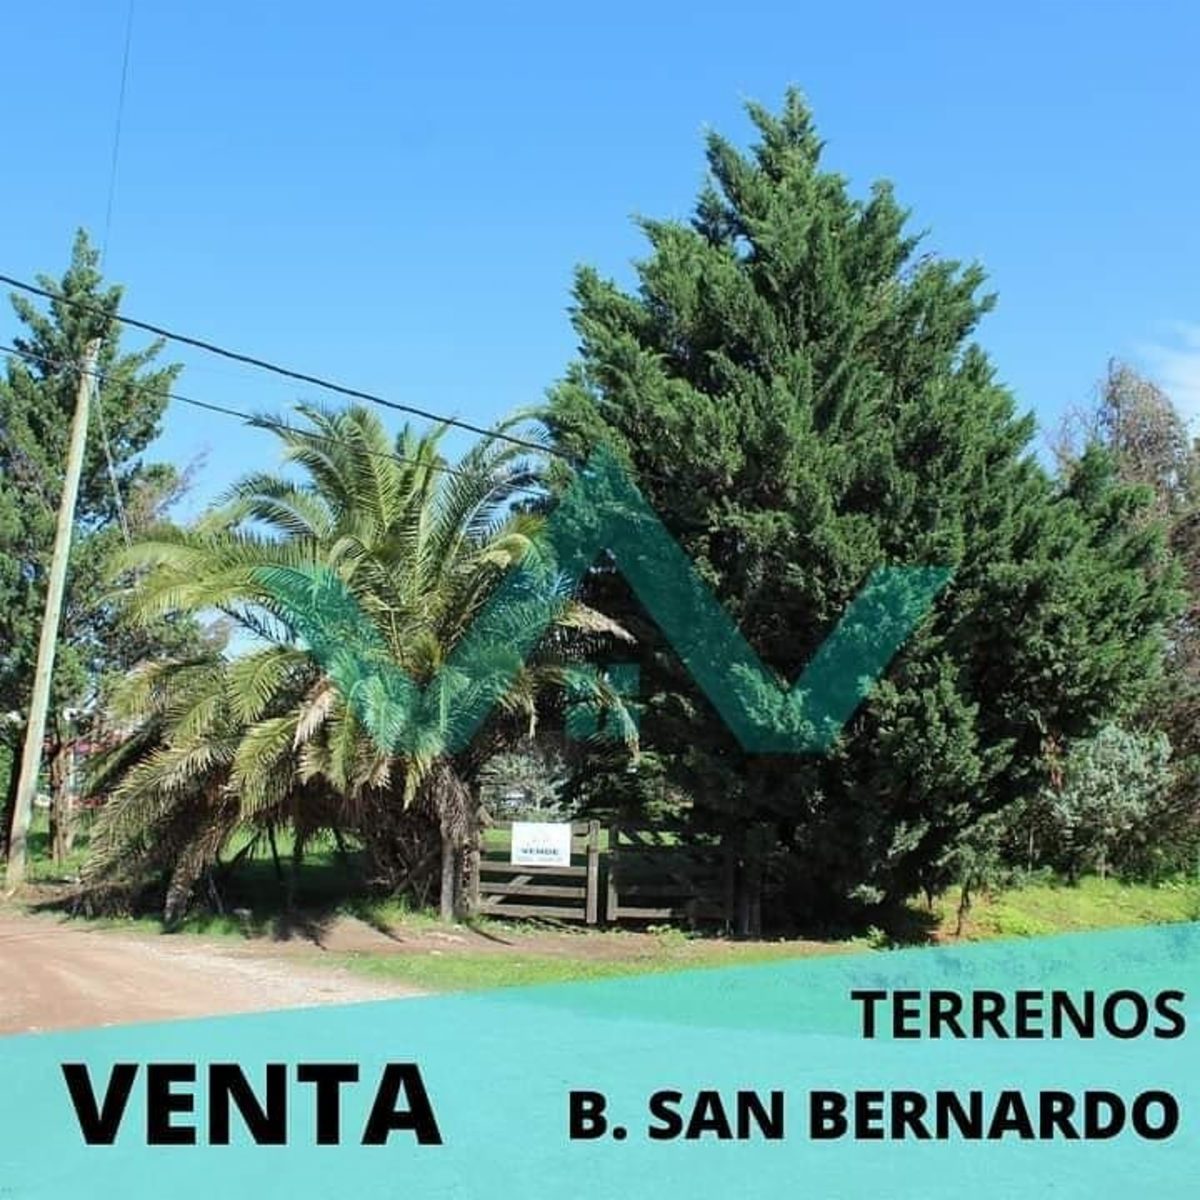 -B. San Bernardo (2 lotes, linderos 237m2 c/u 30.000 USD).